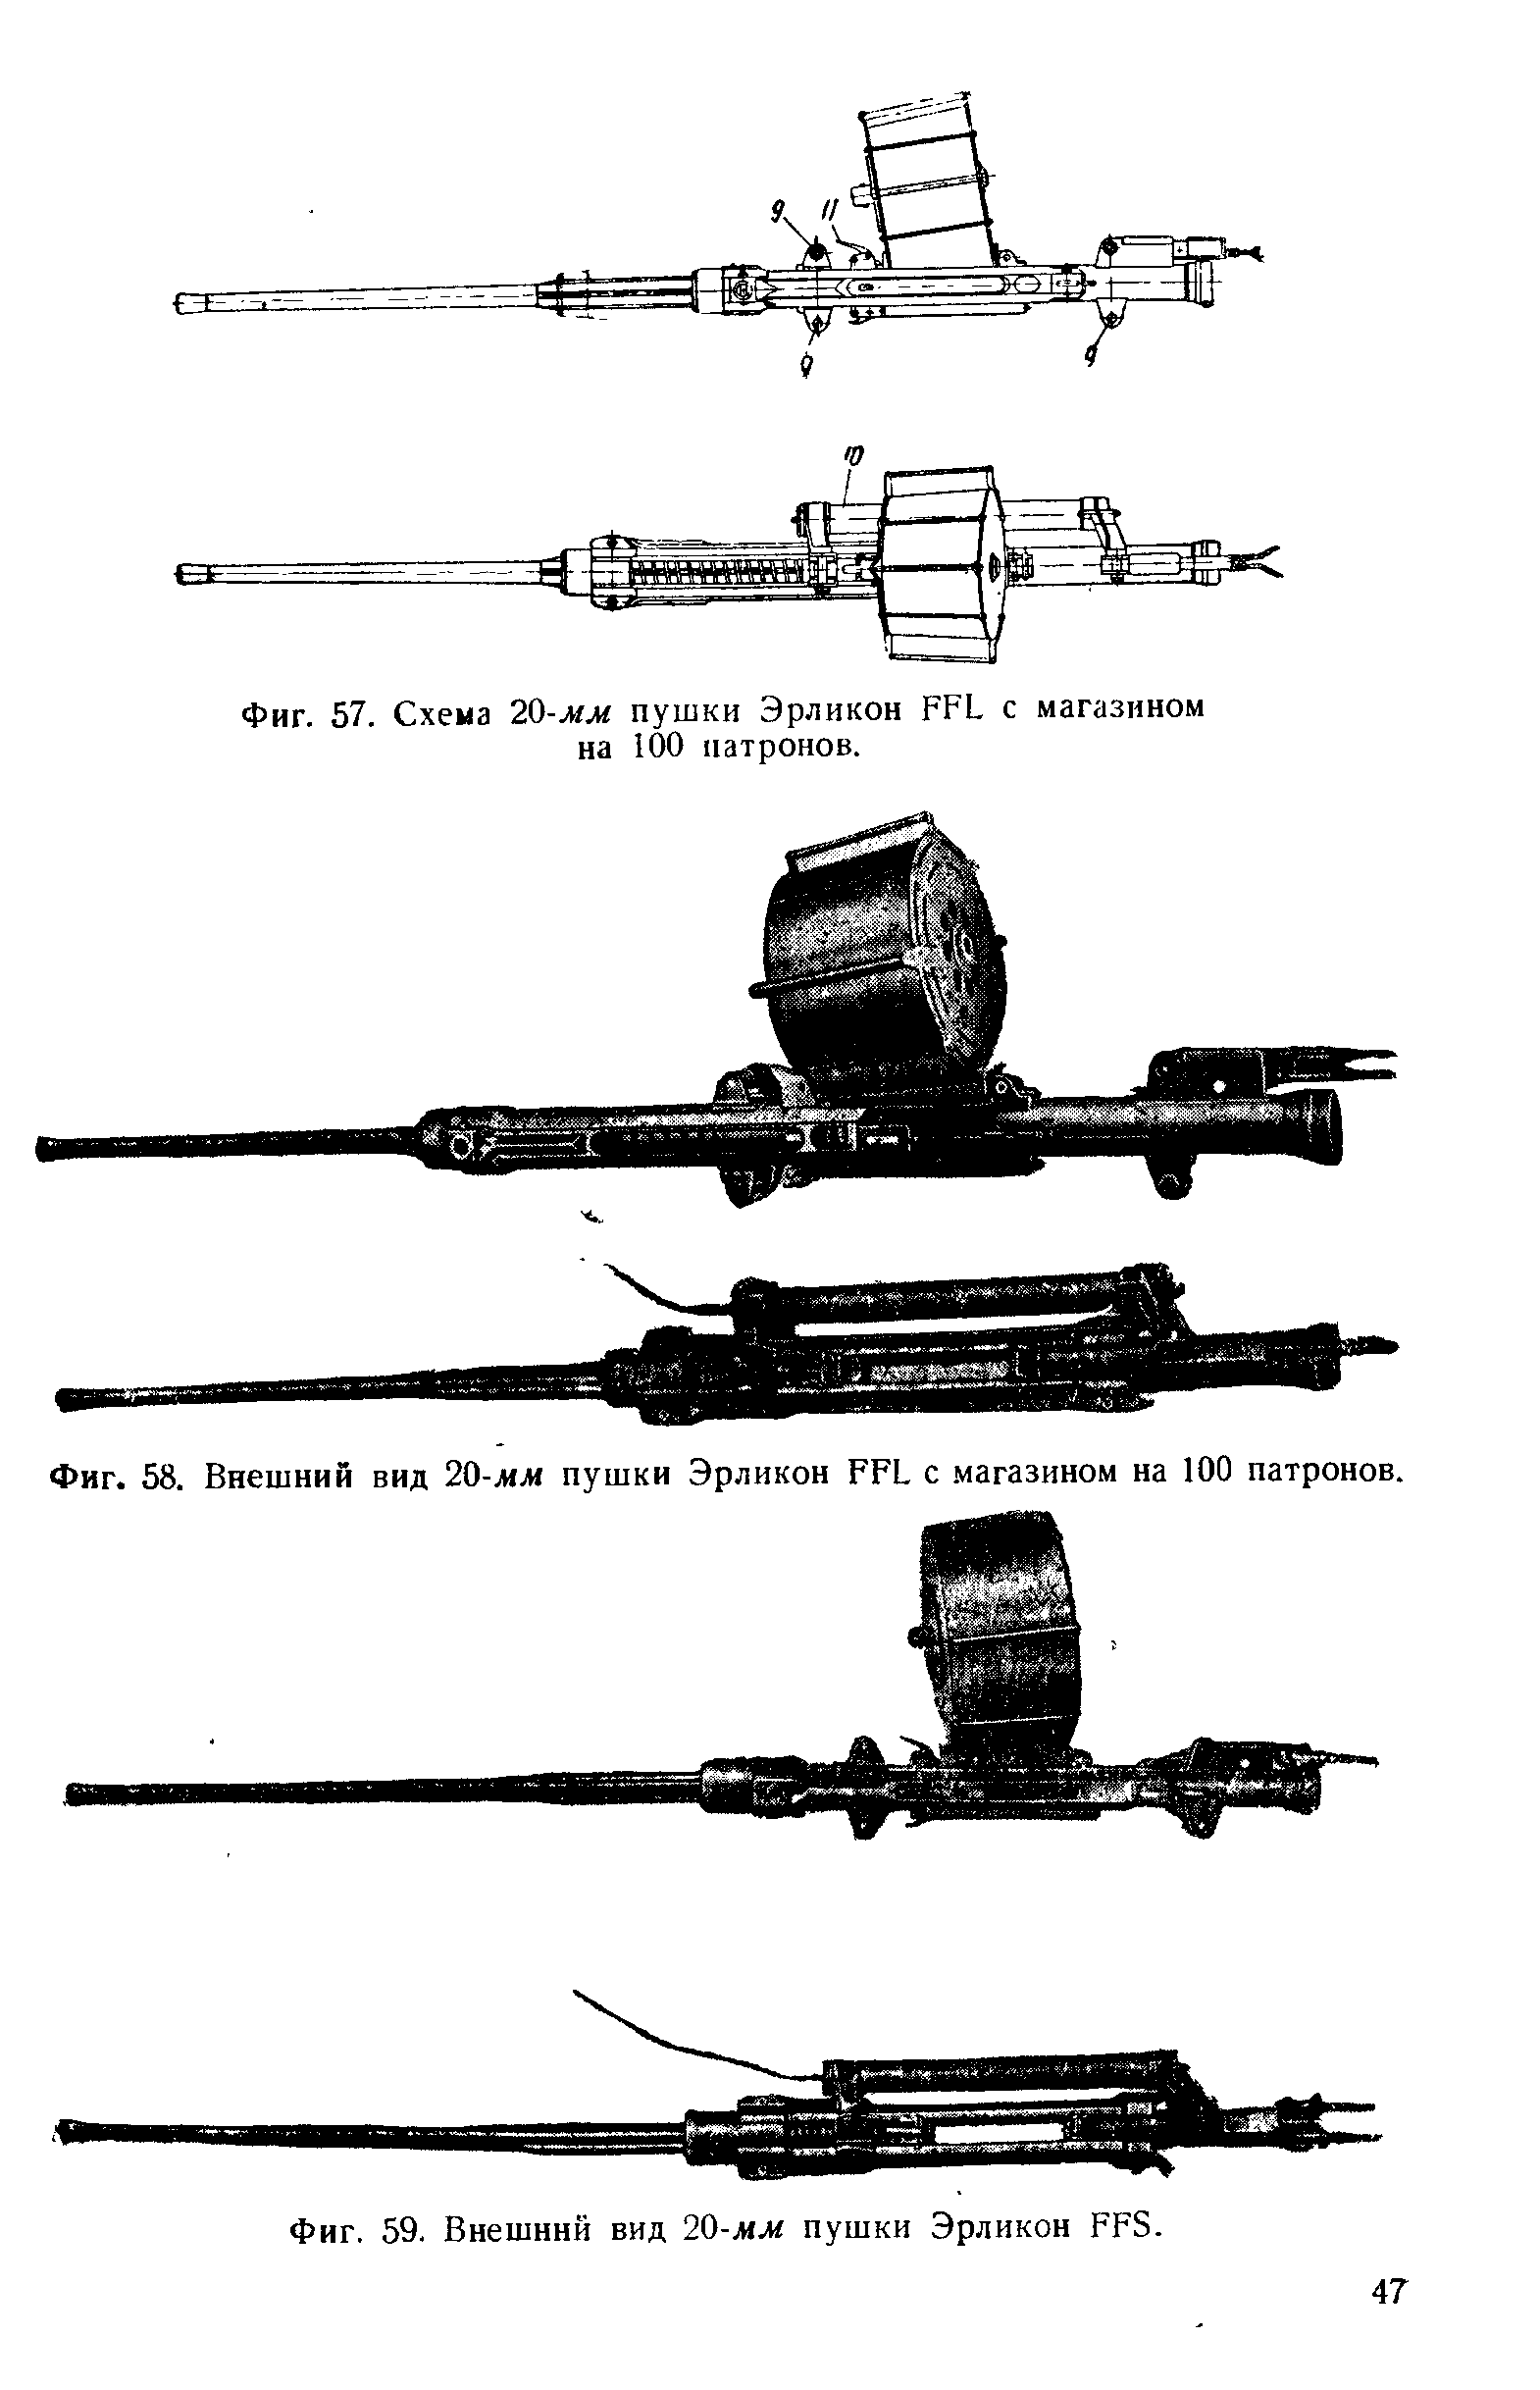 20-мм пушка oerlikon содержание а также история [ править ]